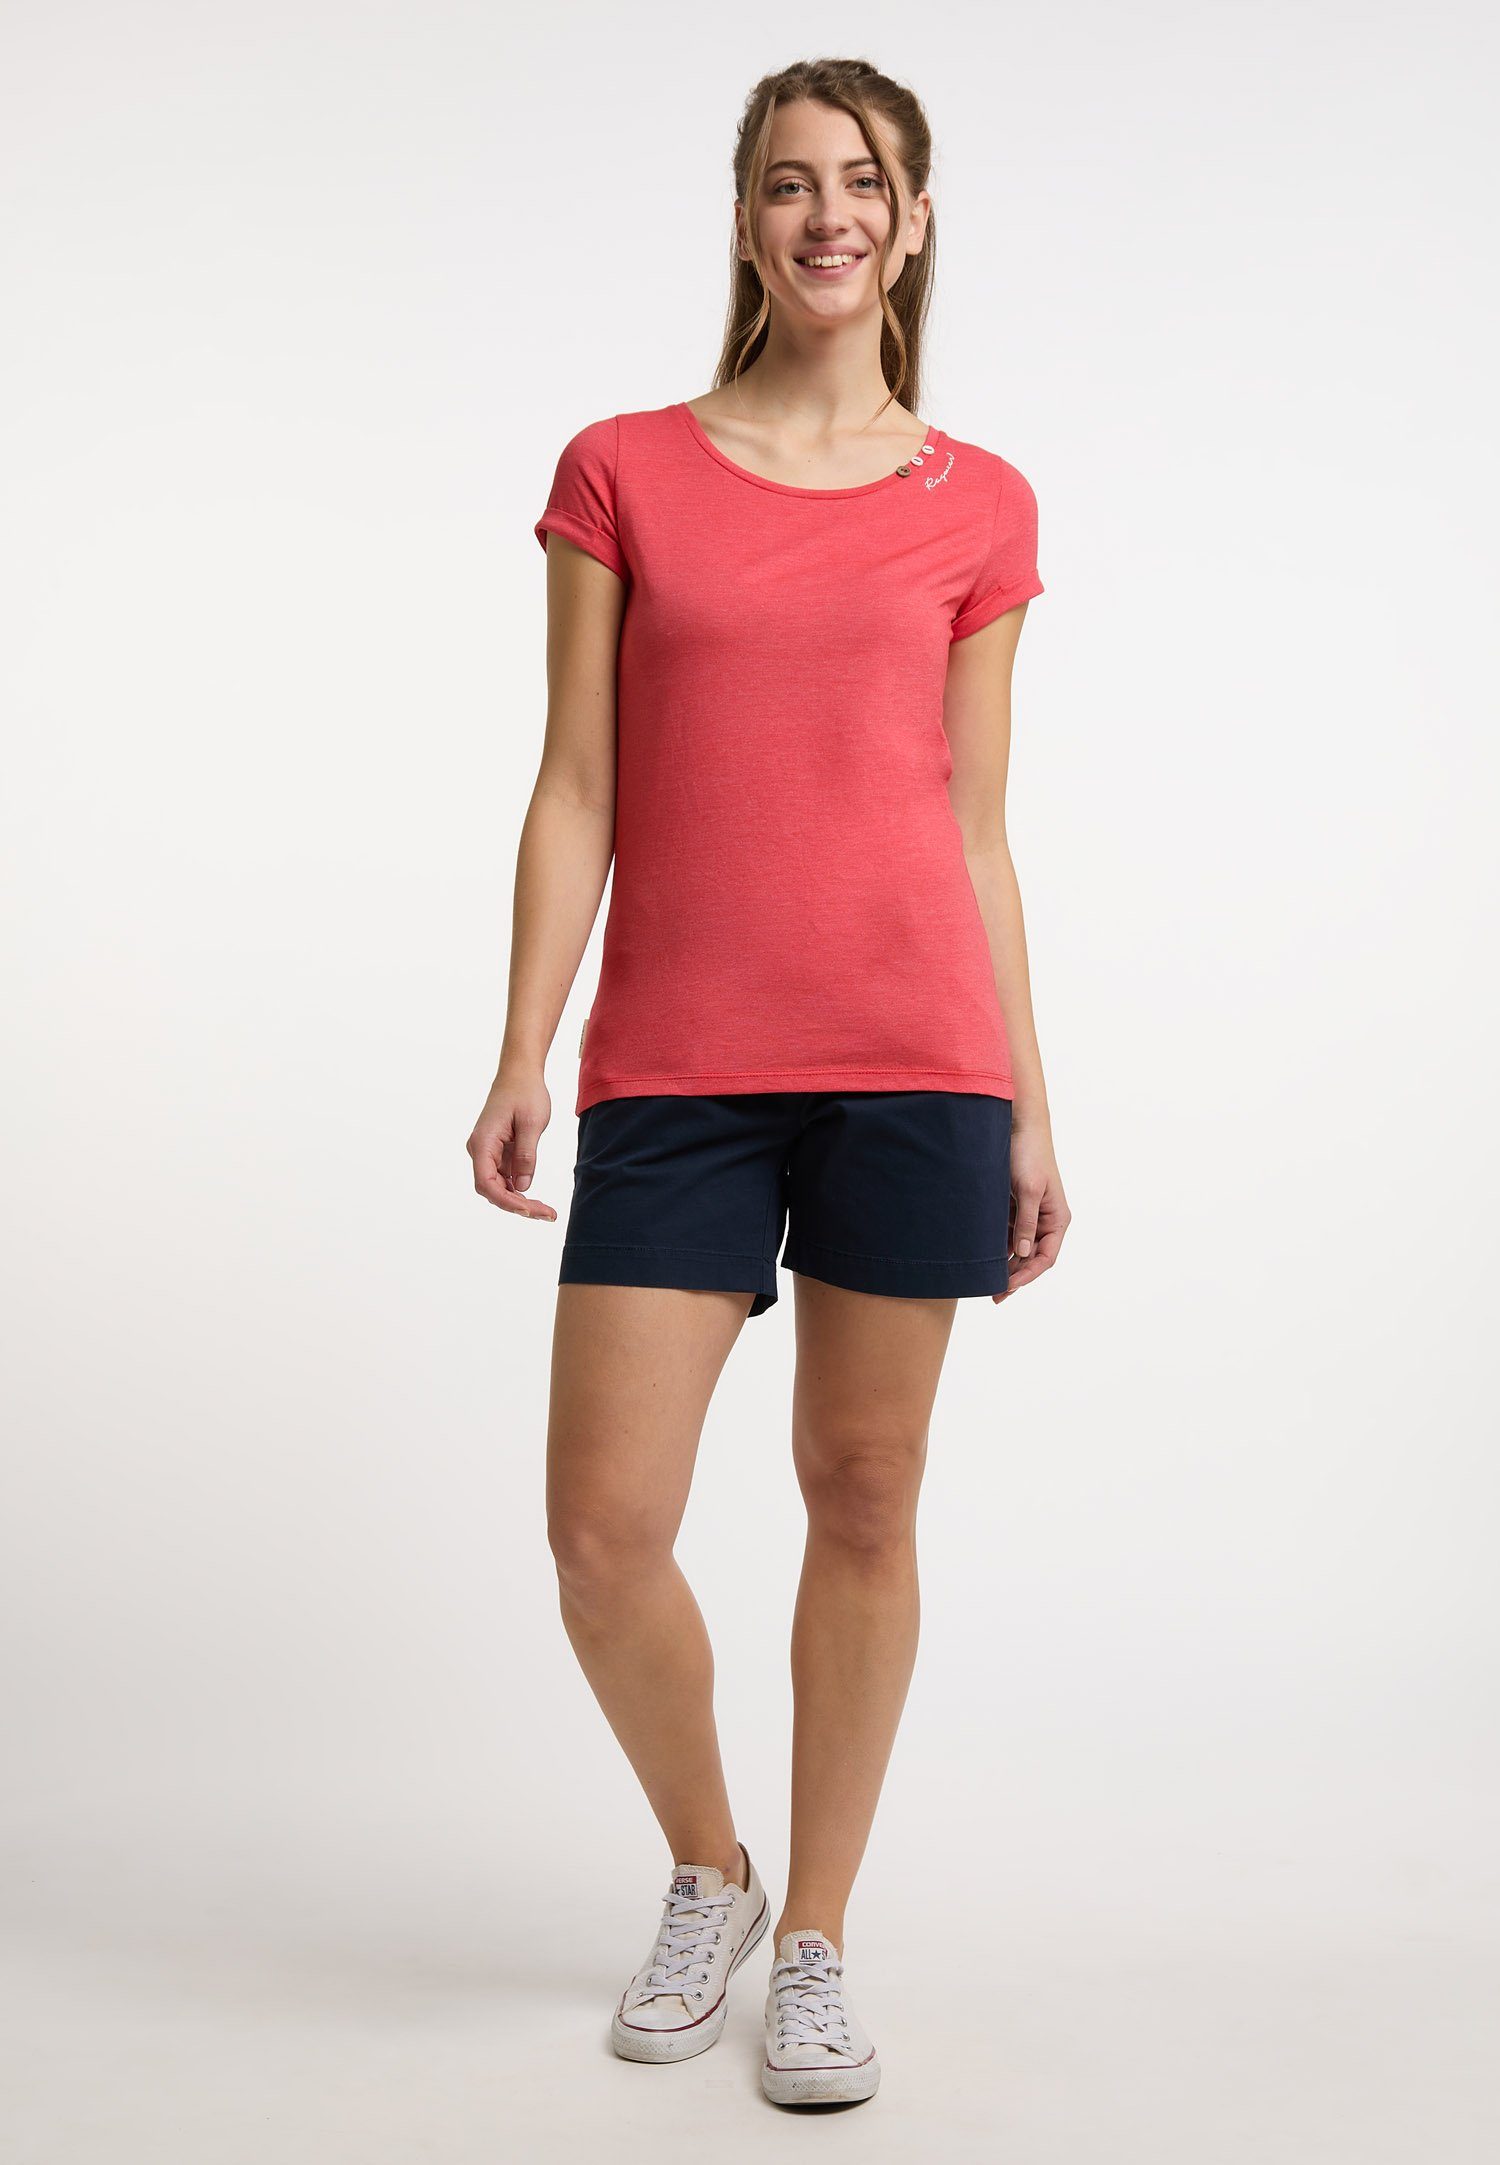 FLORAH Nachhaltige & Mode ORGANIC A Vegane RED T-Shirt Ragwear